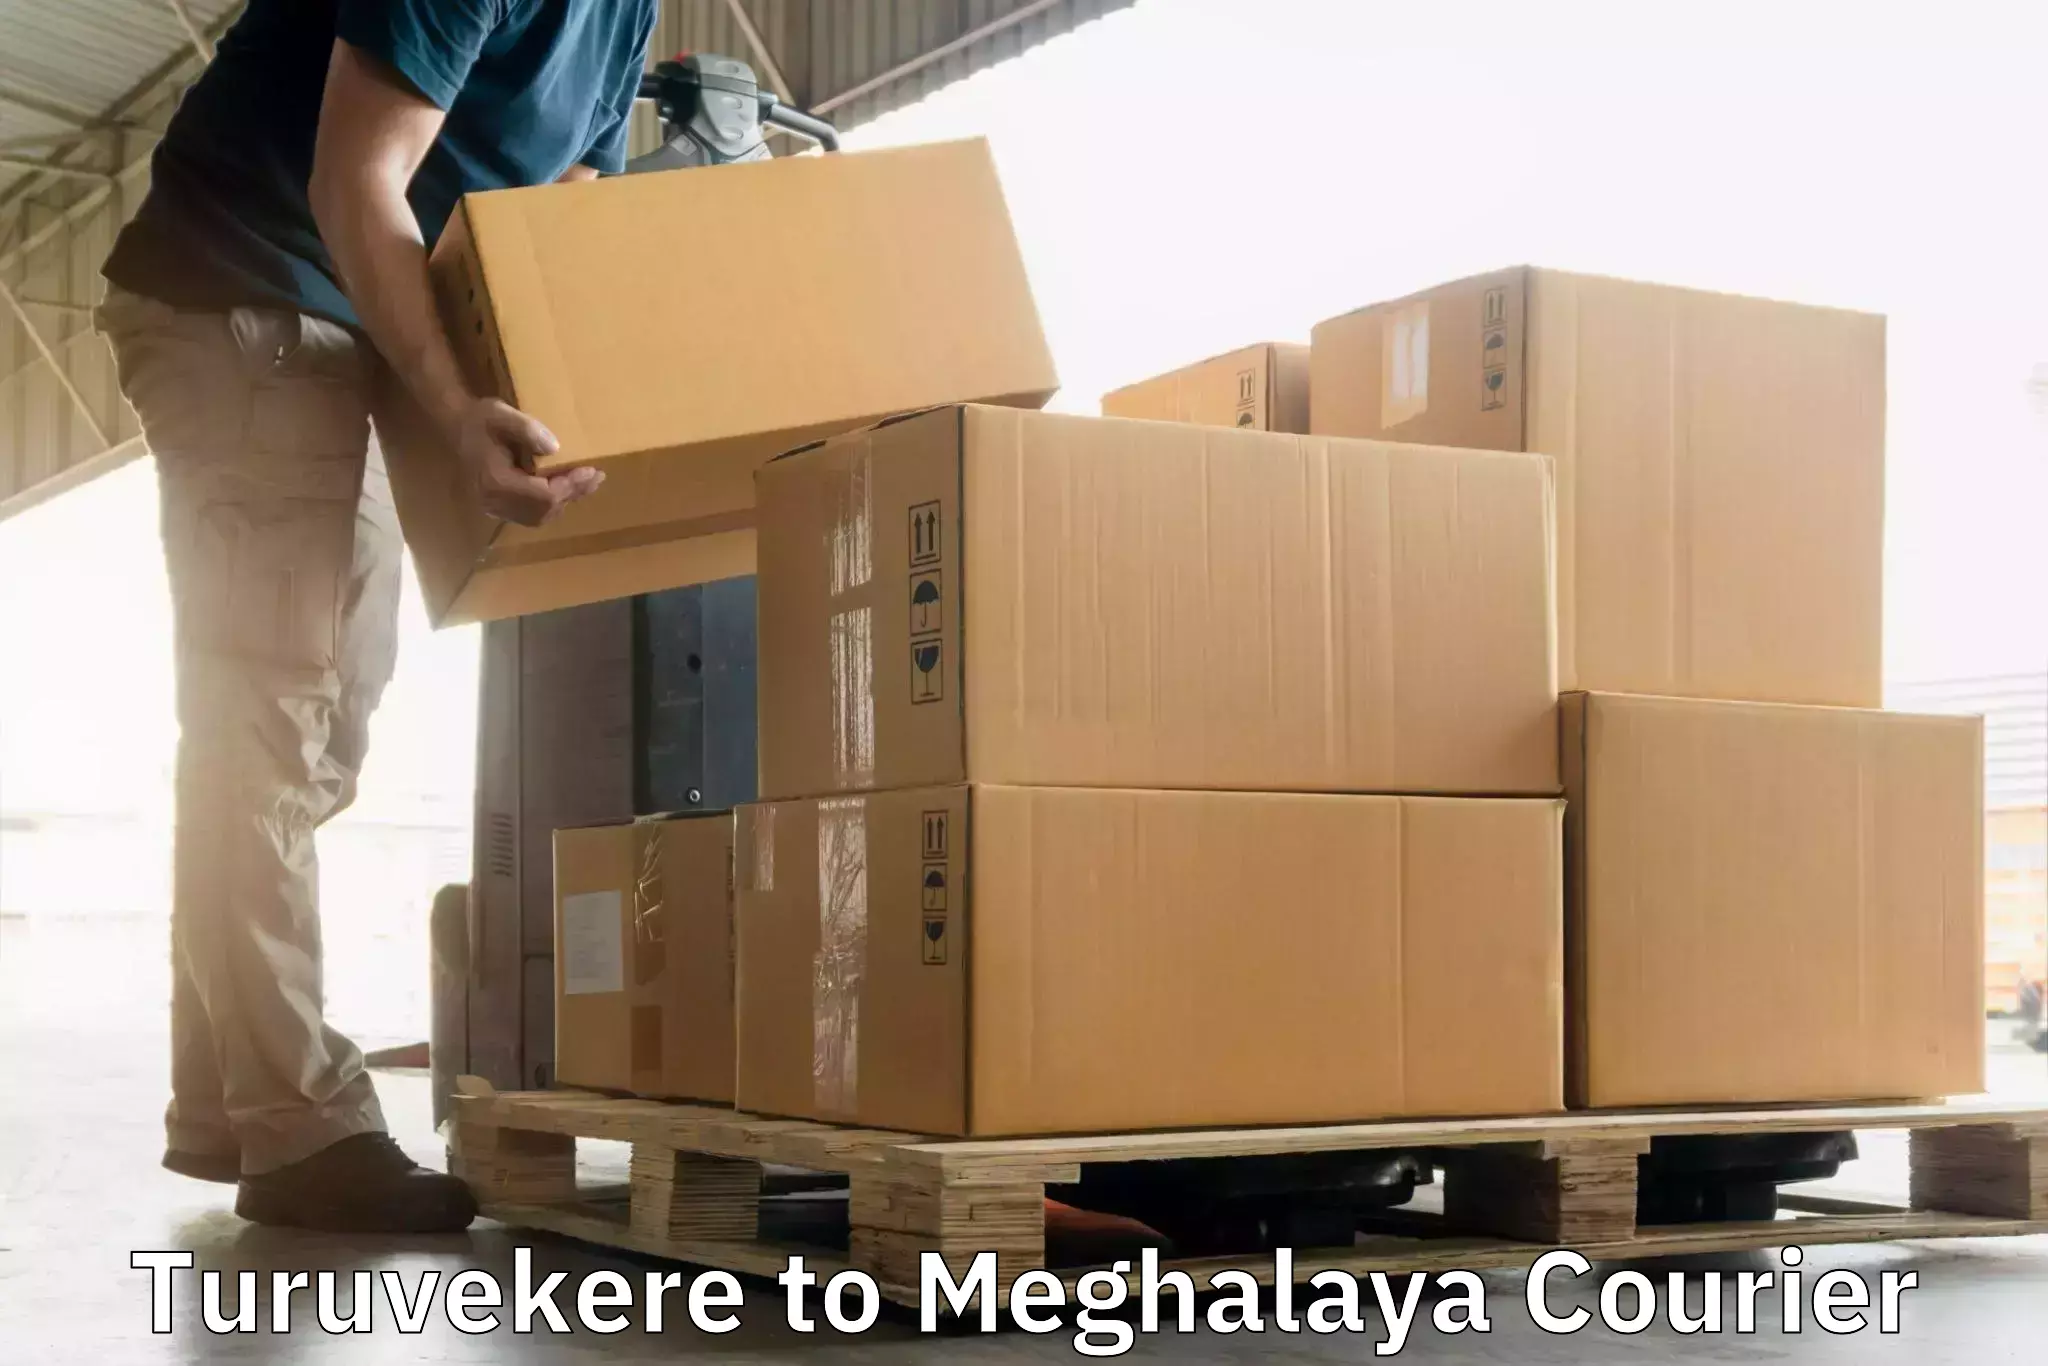 High-performance logistics Turuvekere to Meghalaya